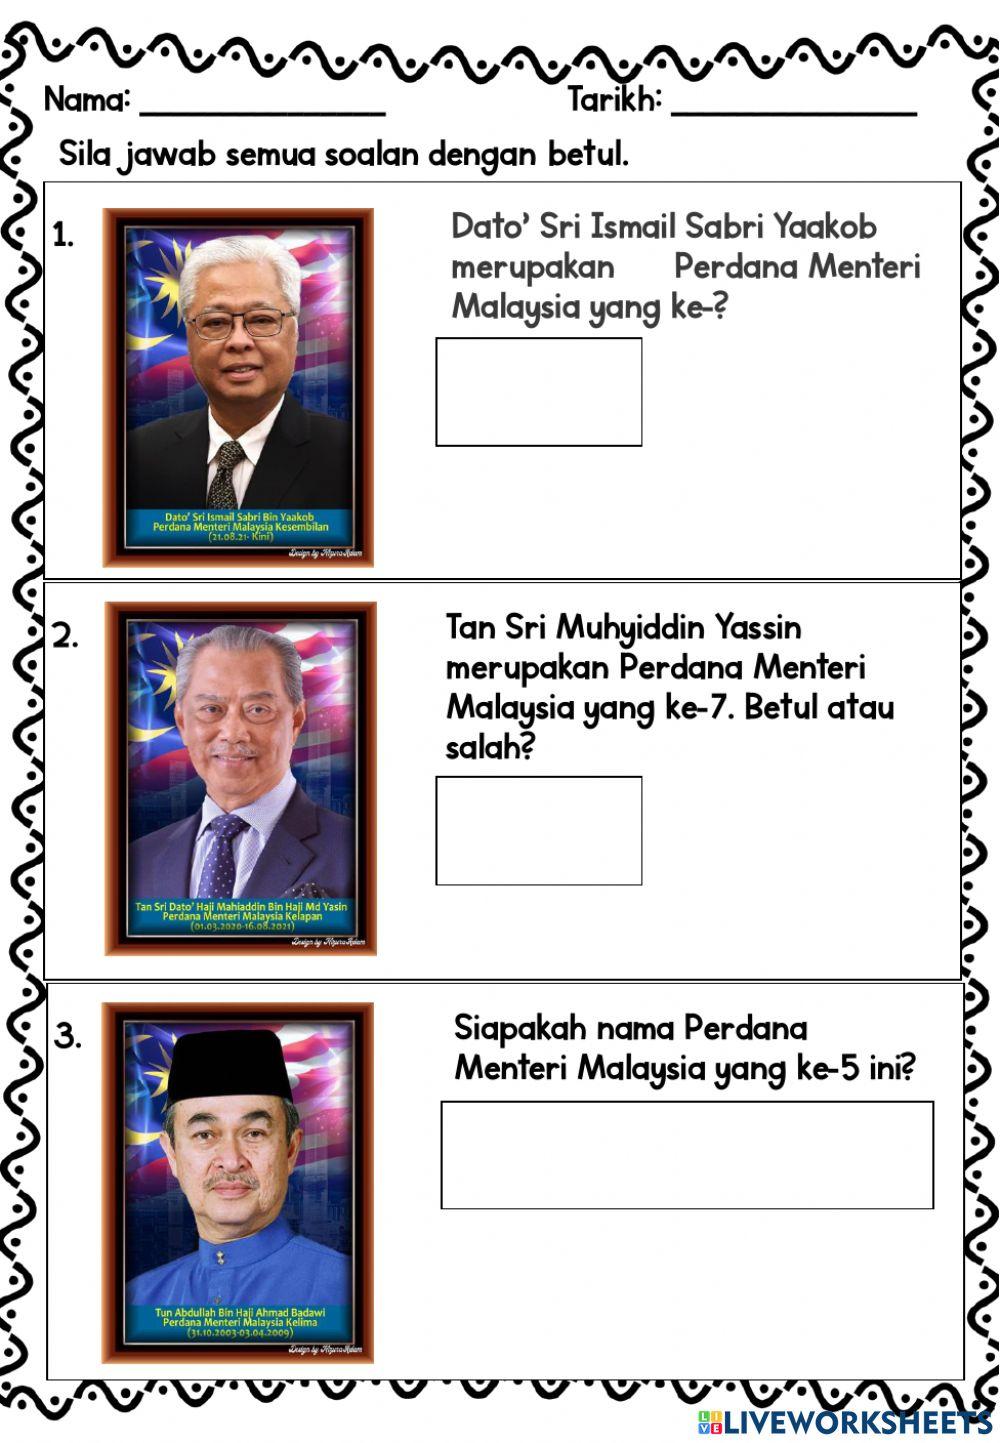 Nama-nama perdana menteri malaysia